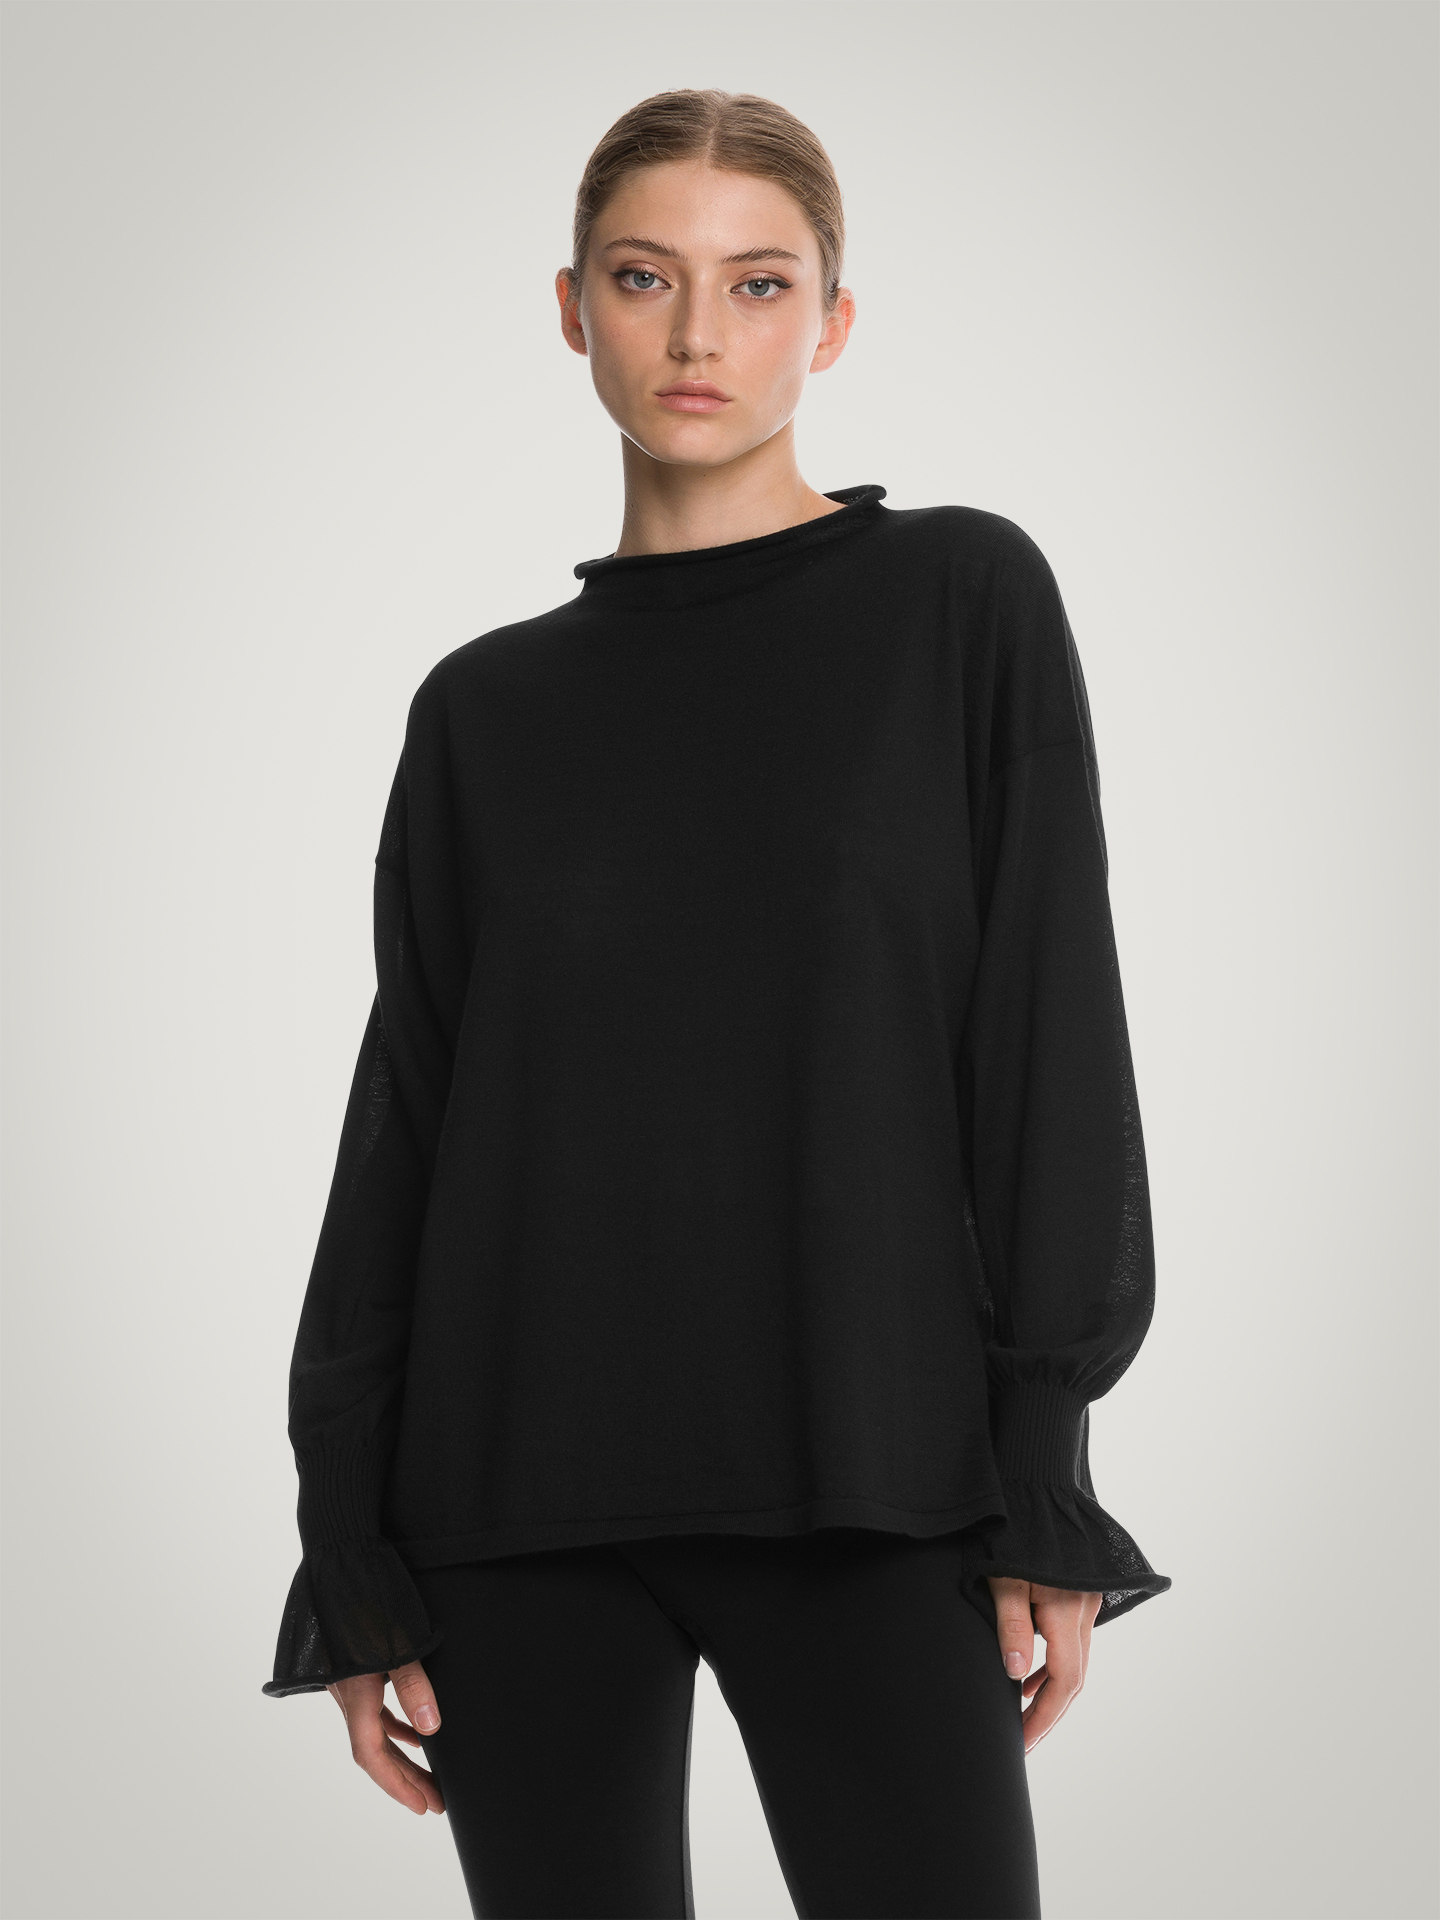 Wolford - Cashmere Loose Top Long Sleeve, Frau, black, Größe: L günstig online kaufen